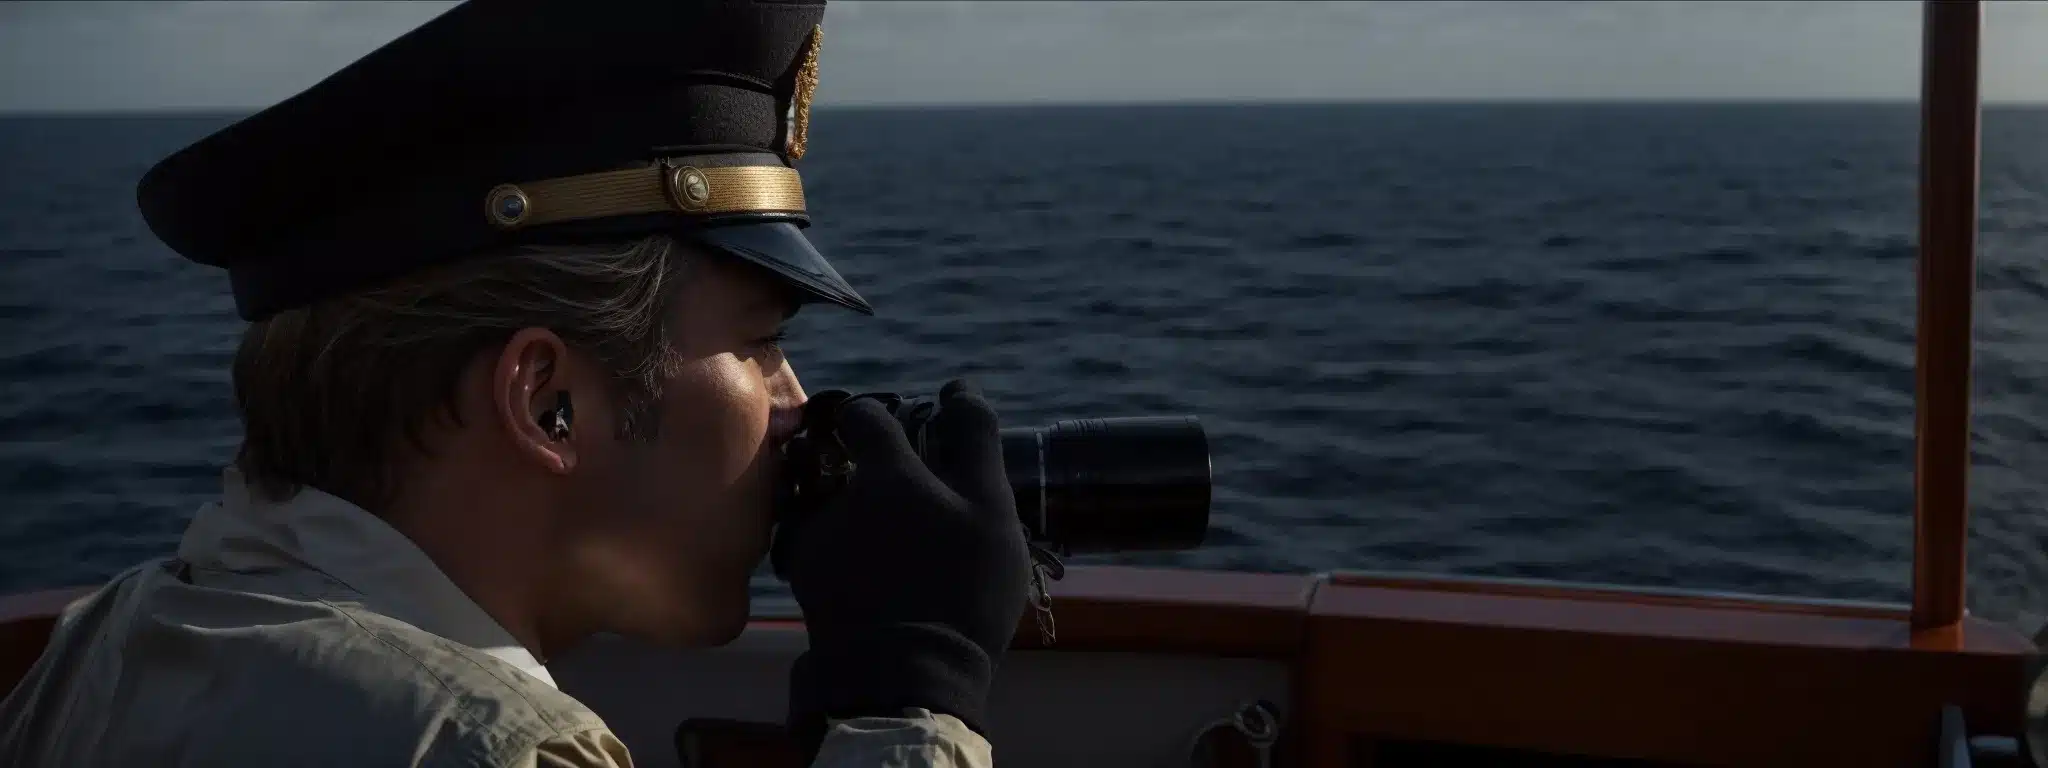 A Ship'S Captain At The Helm, Gazing Through A Spyglass Towards A Distant Horizon Over A Vast Ocean.